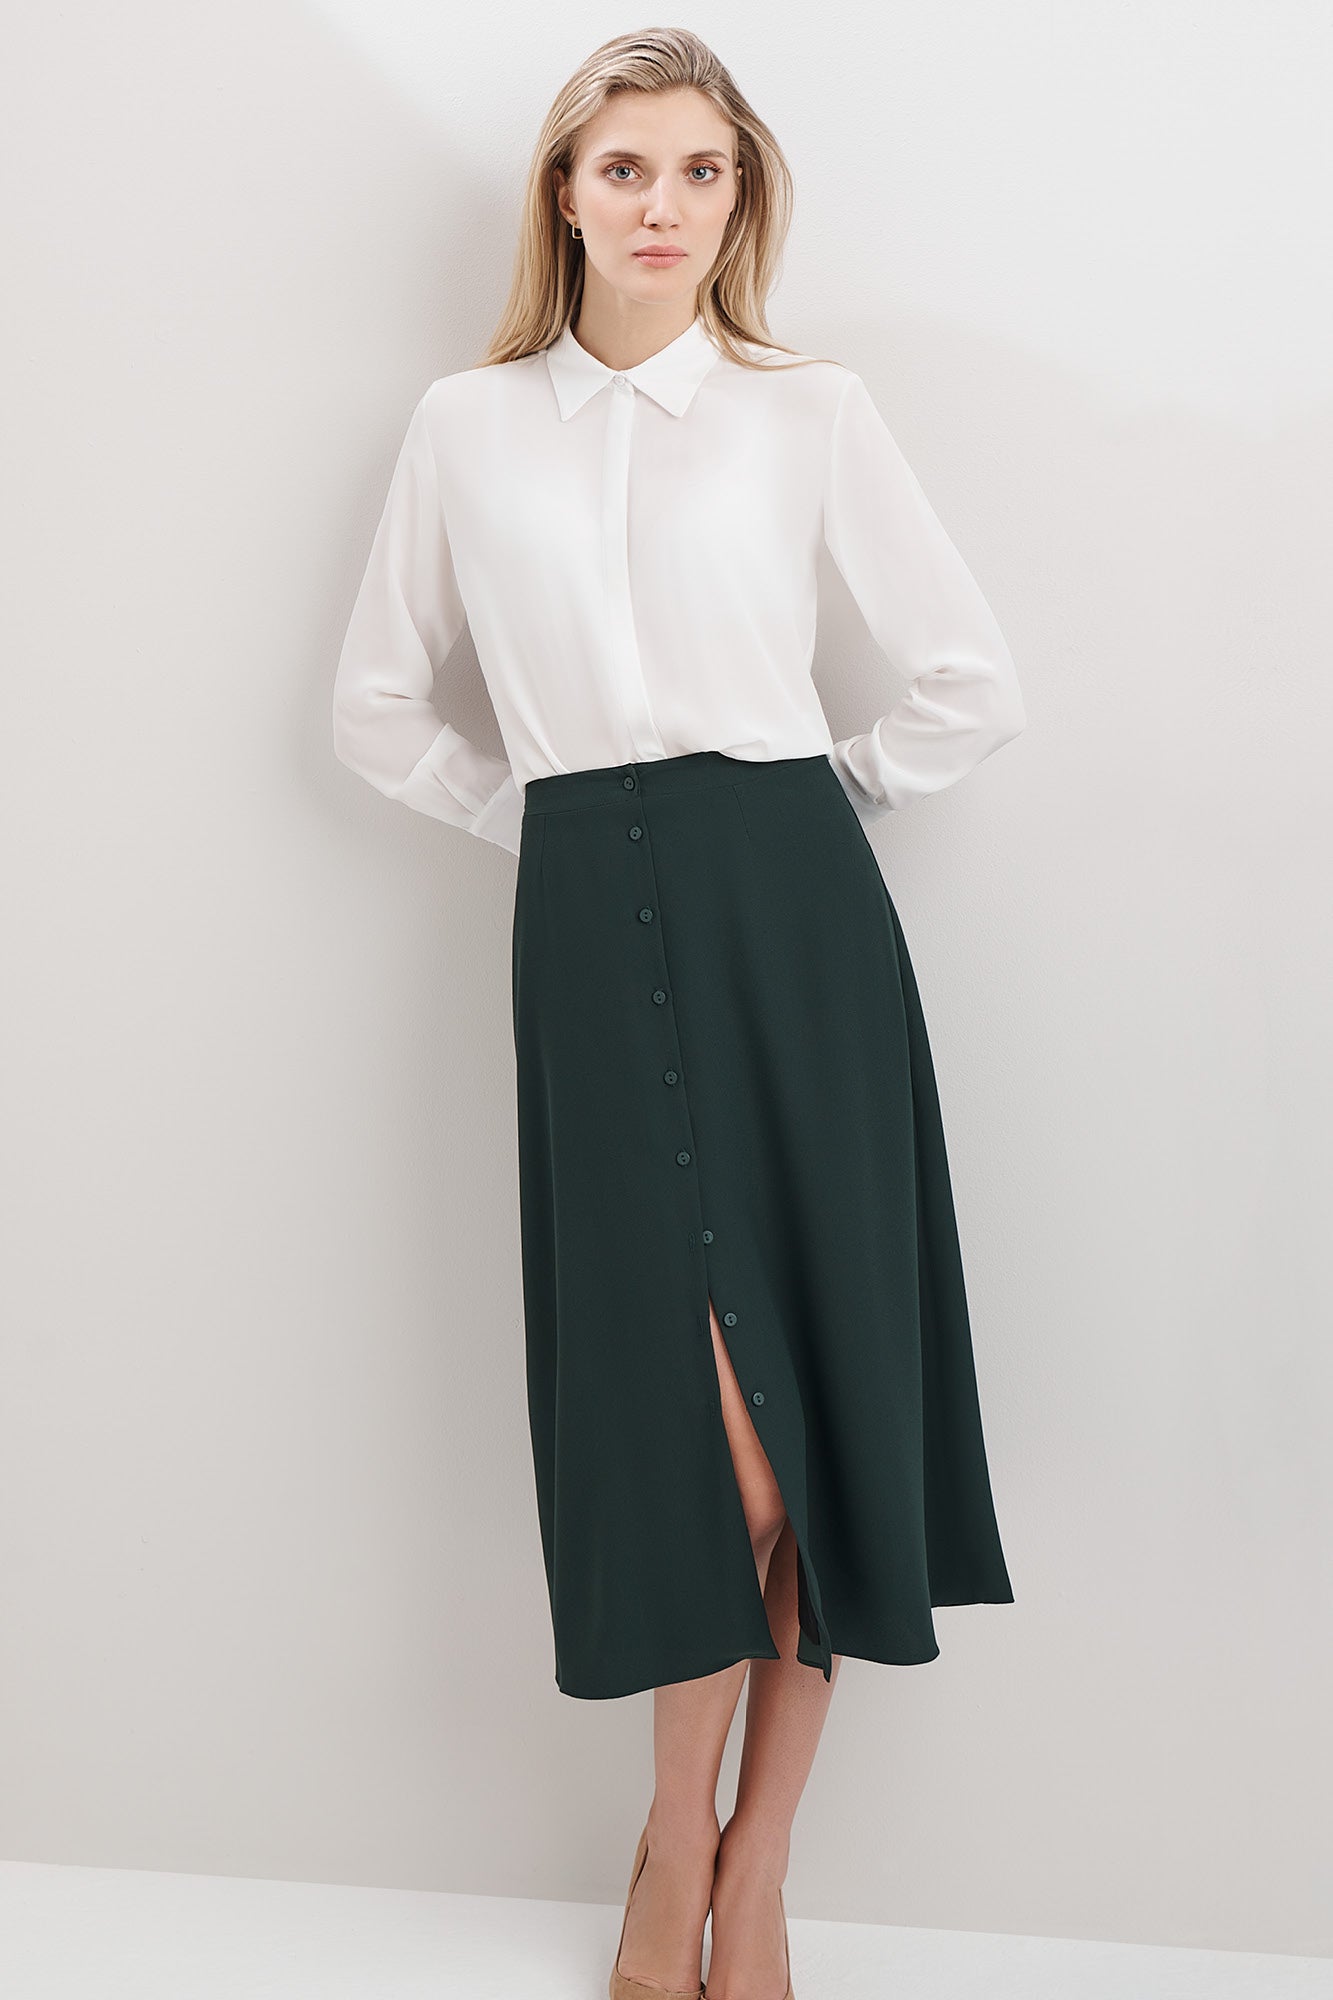 Twyford Green Skirt